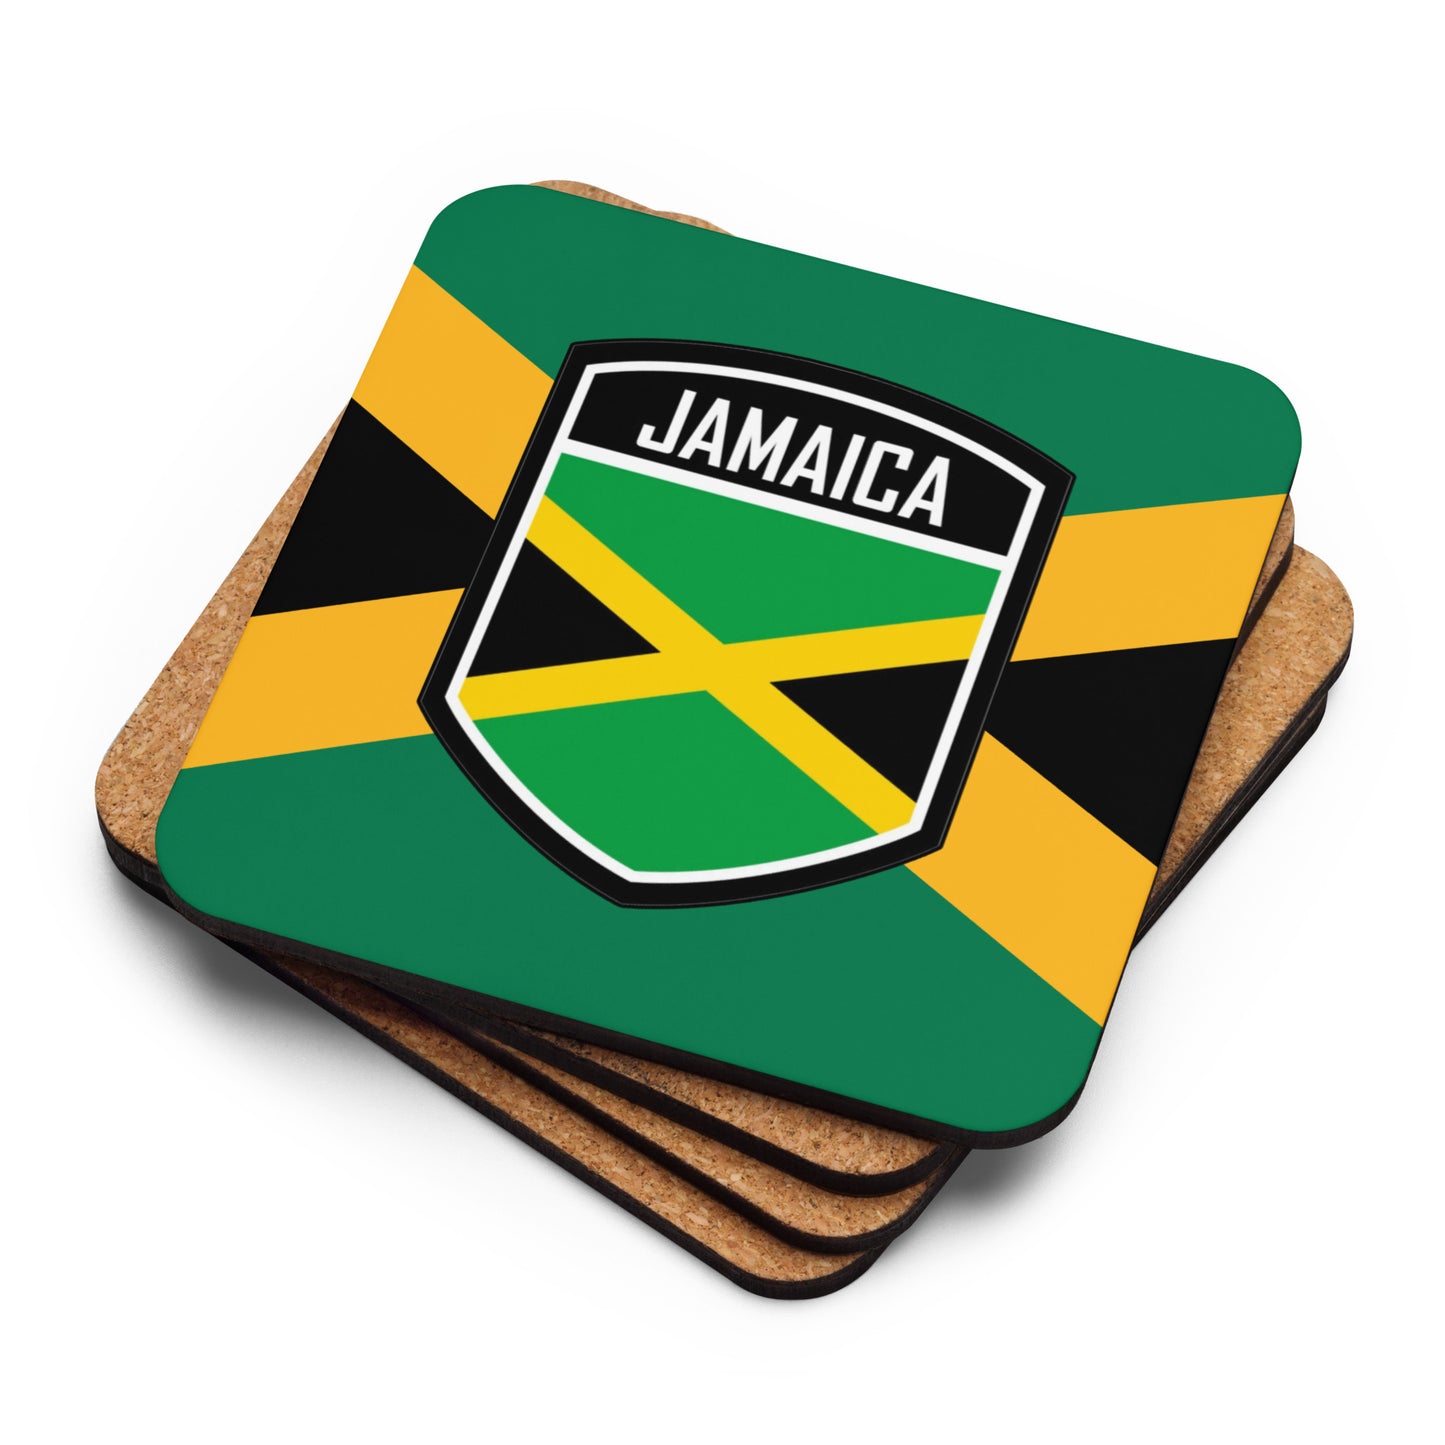 Jamaica Cork-back coaster